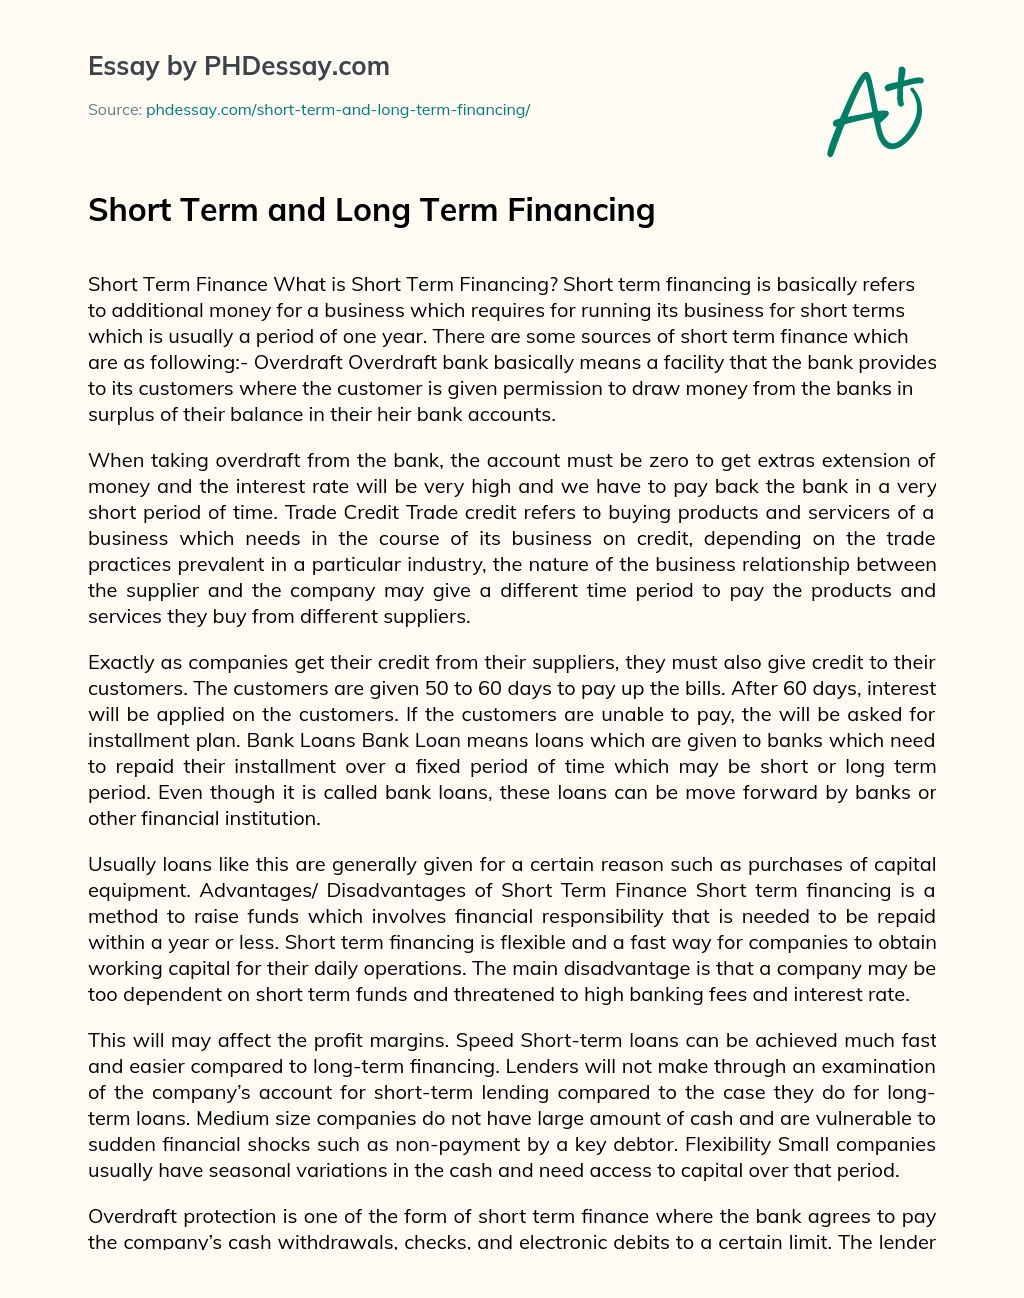 Short Term and Long Term Financing essay